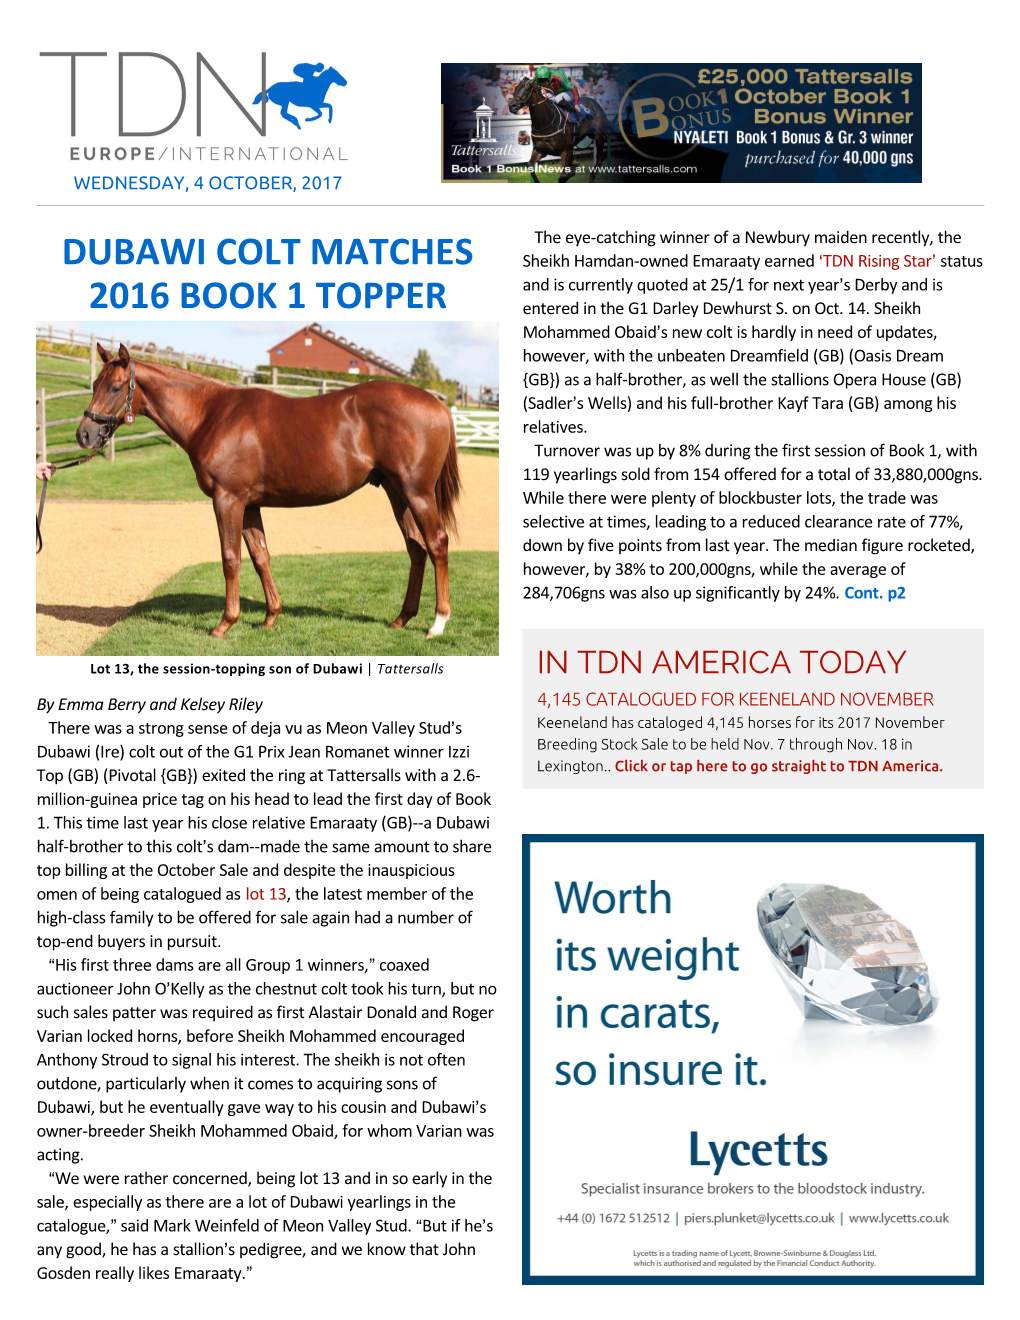 Dubawi Colt Matches 2016 Book 1 Topper